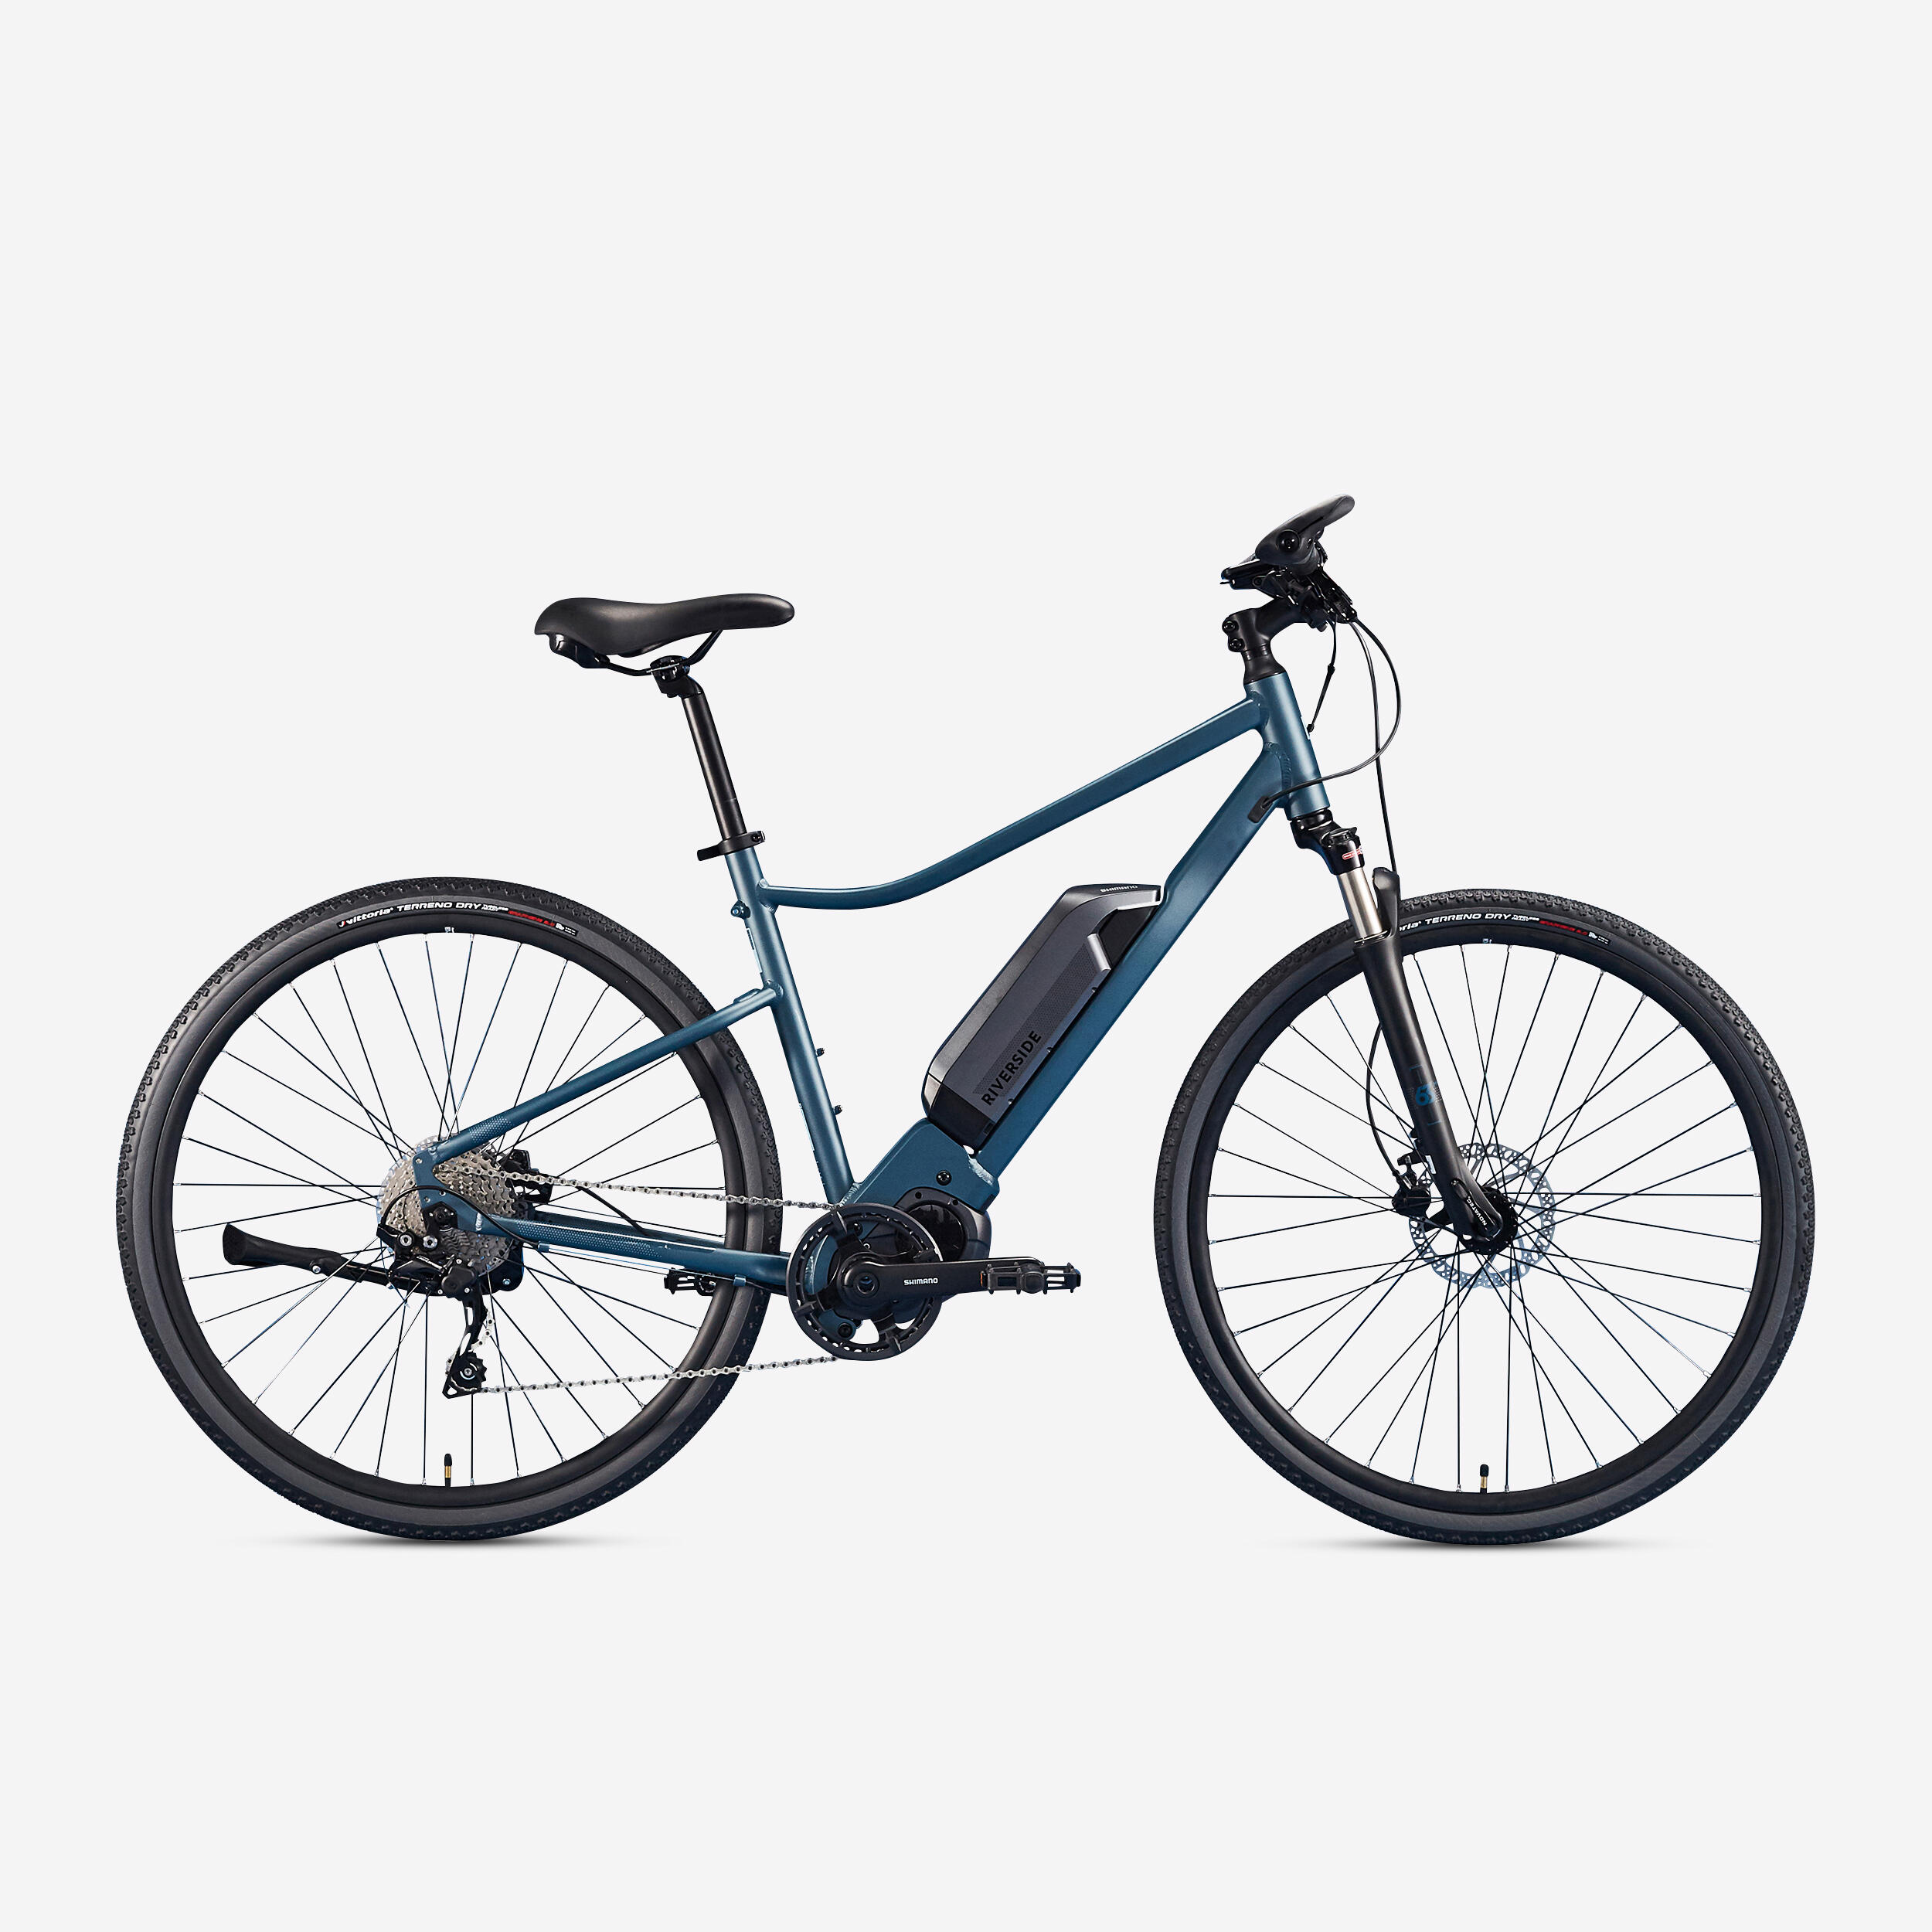 RIVERSIDE Shimano 60 Nm motor, long-distance electric hybrid bike, blue